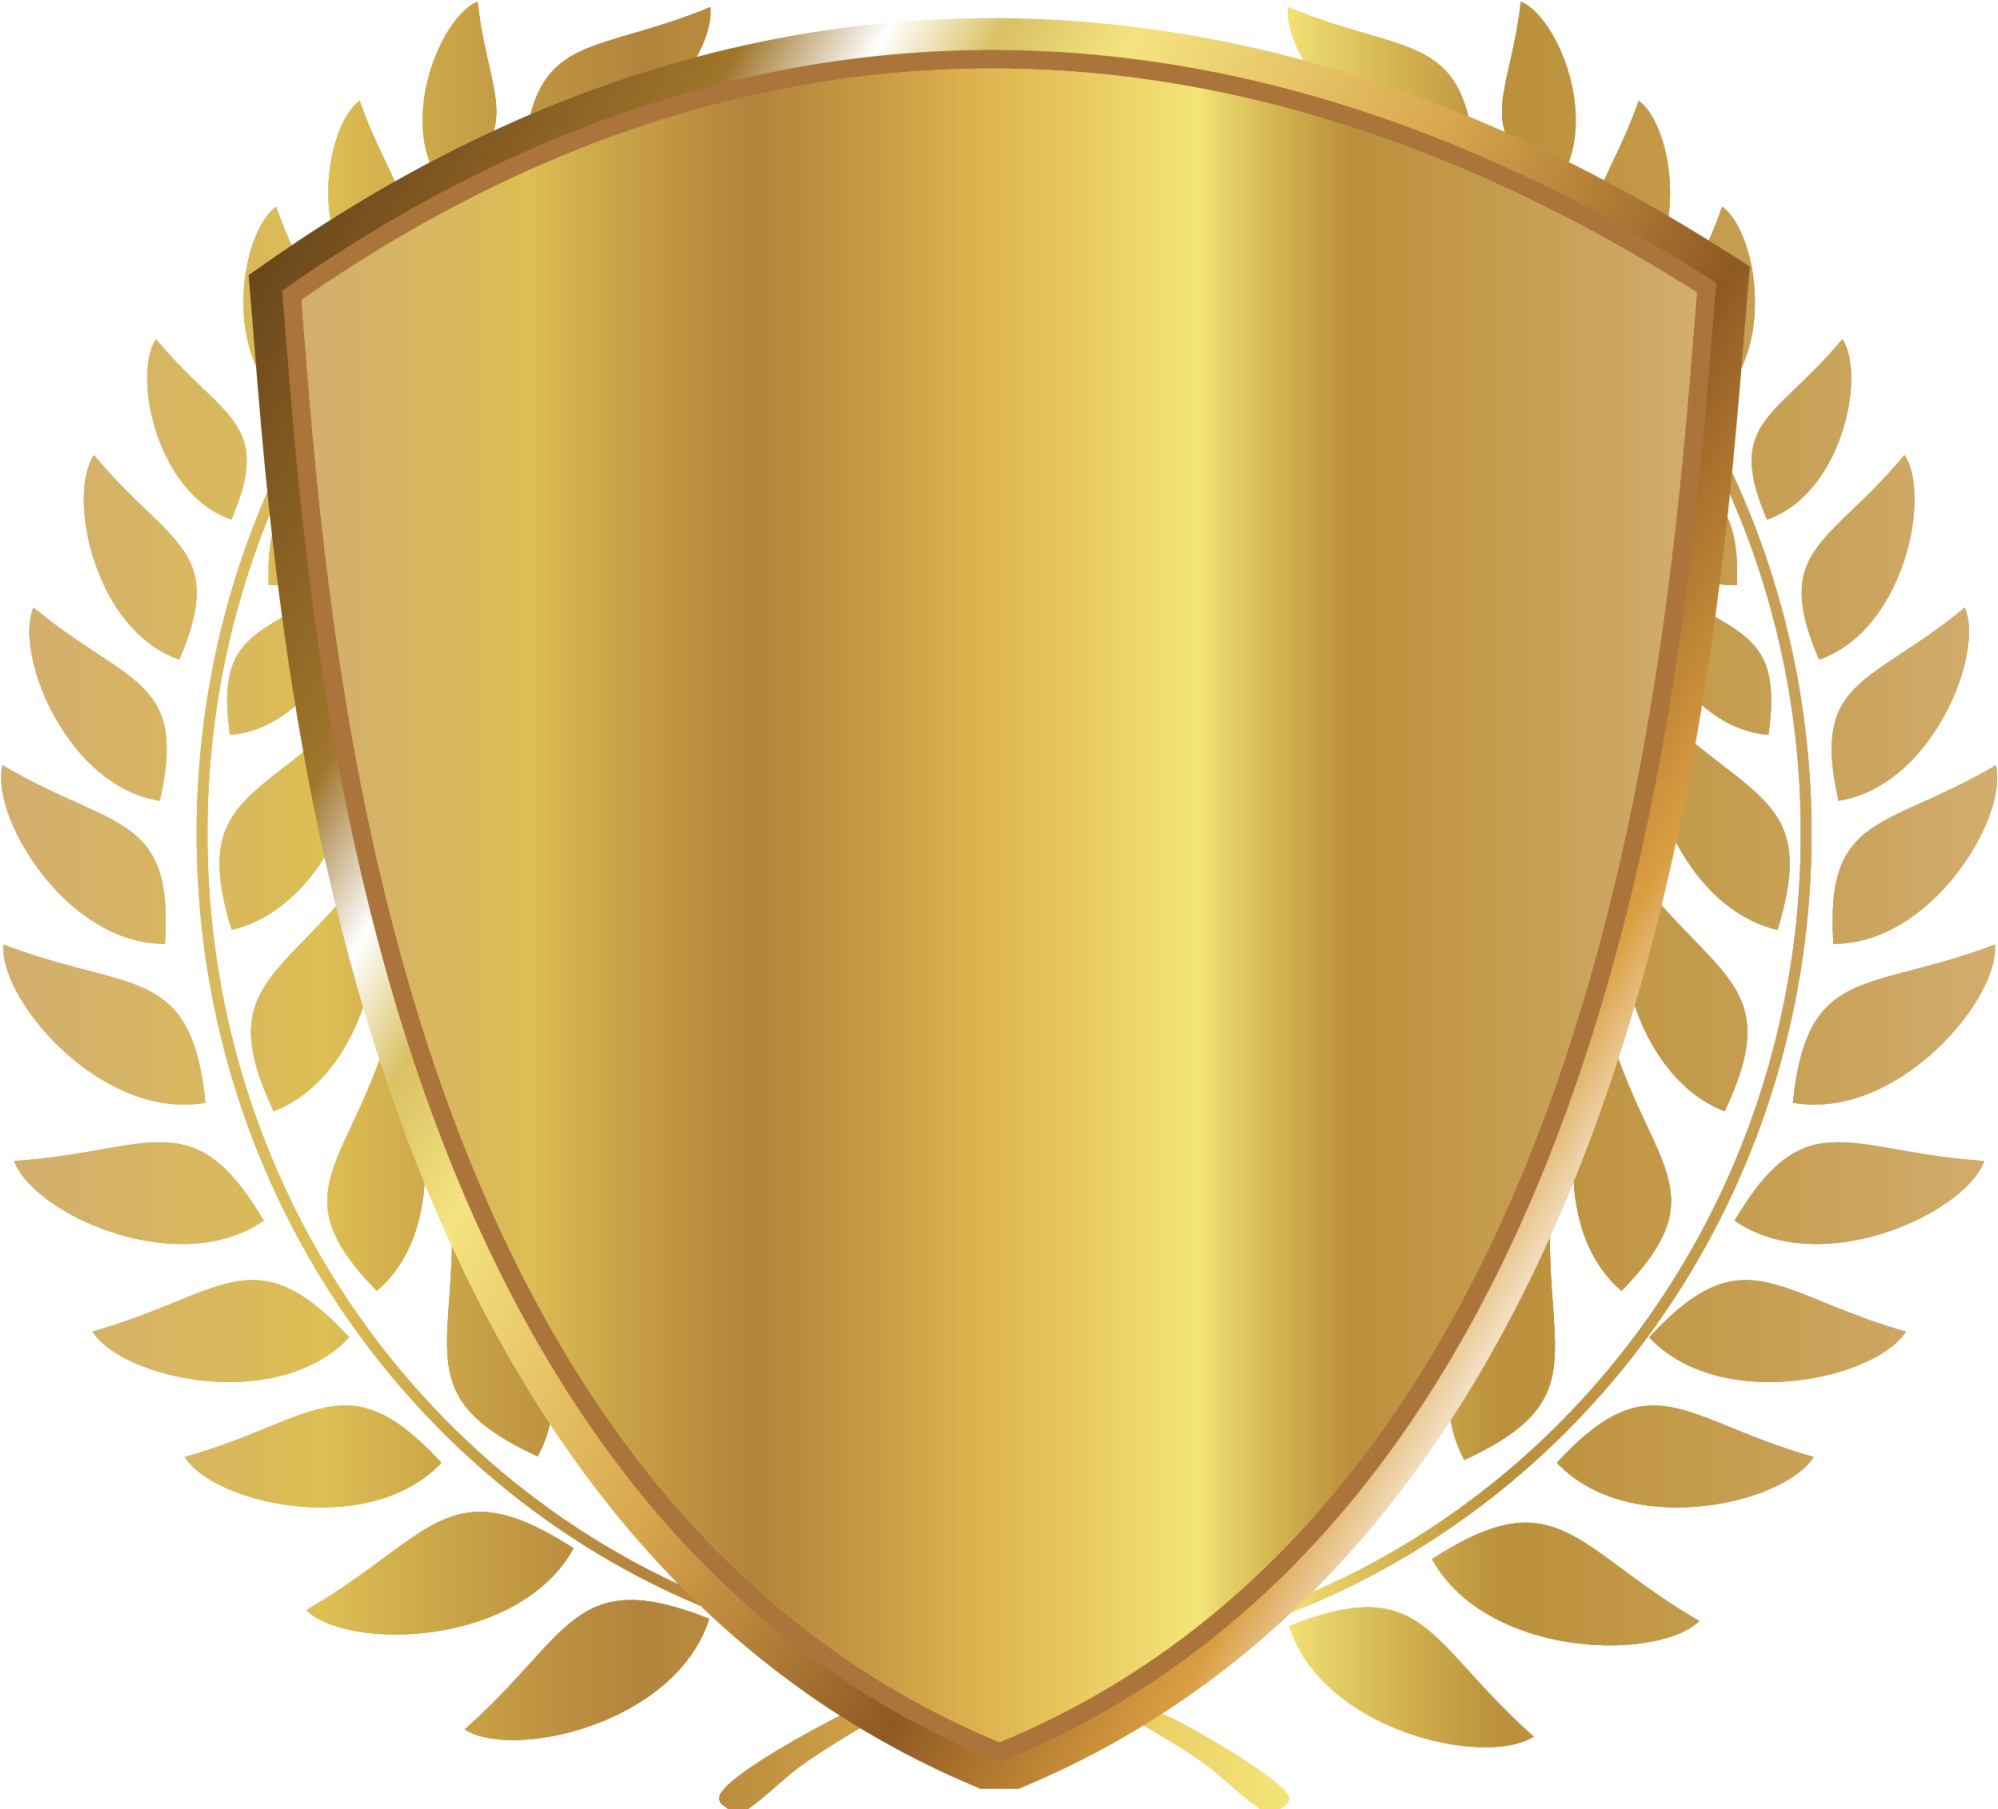 Business Financial Adviser Award Laurel Wreath - Award Shield Png (2000x1825)